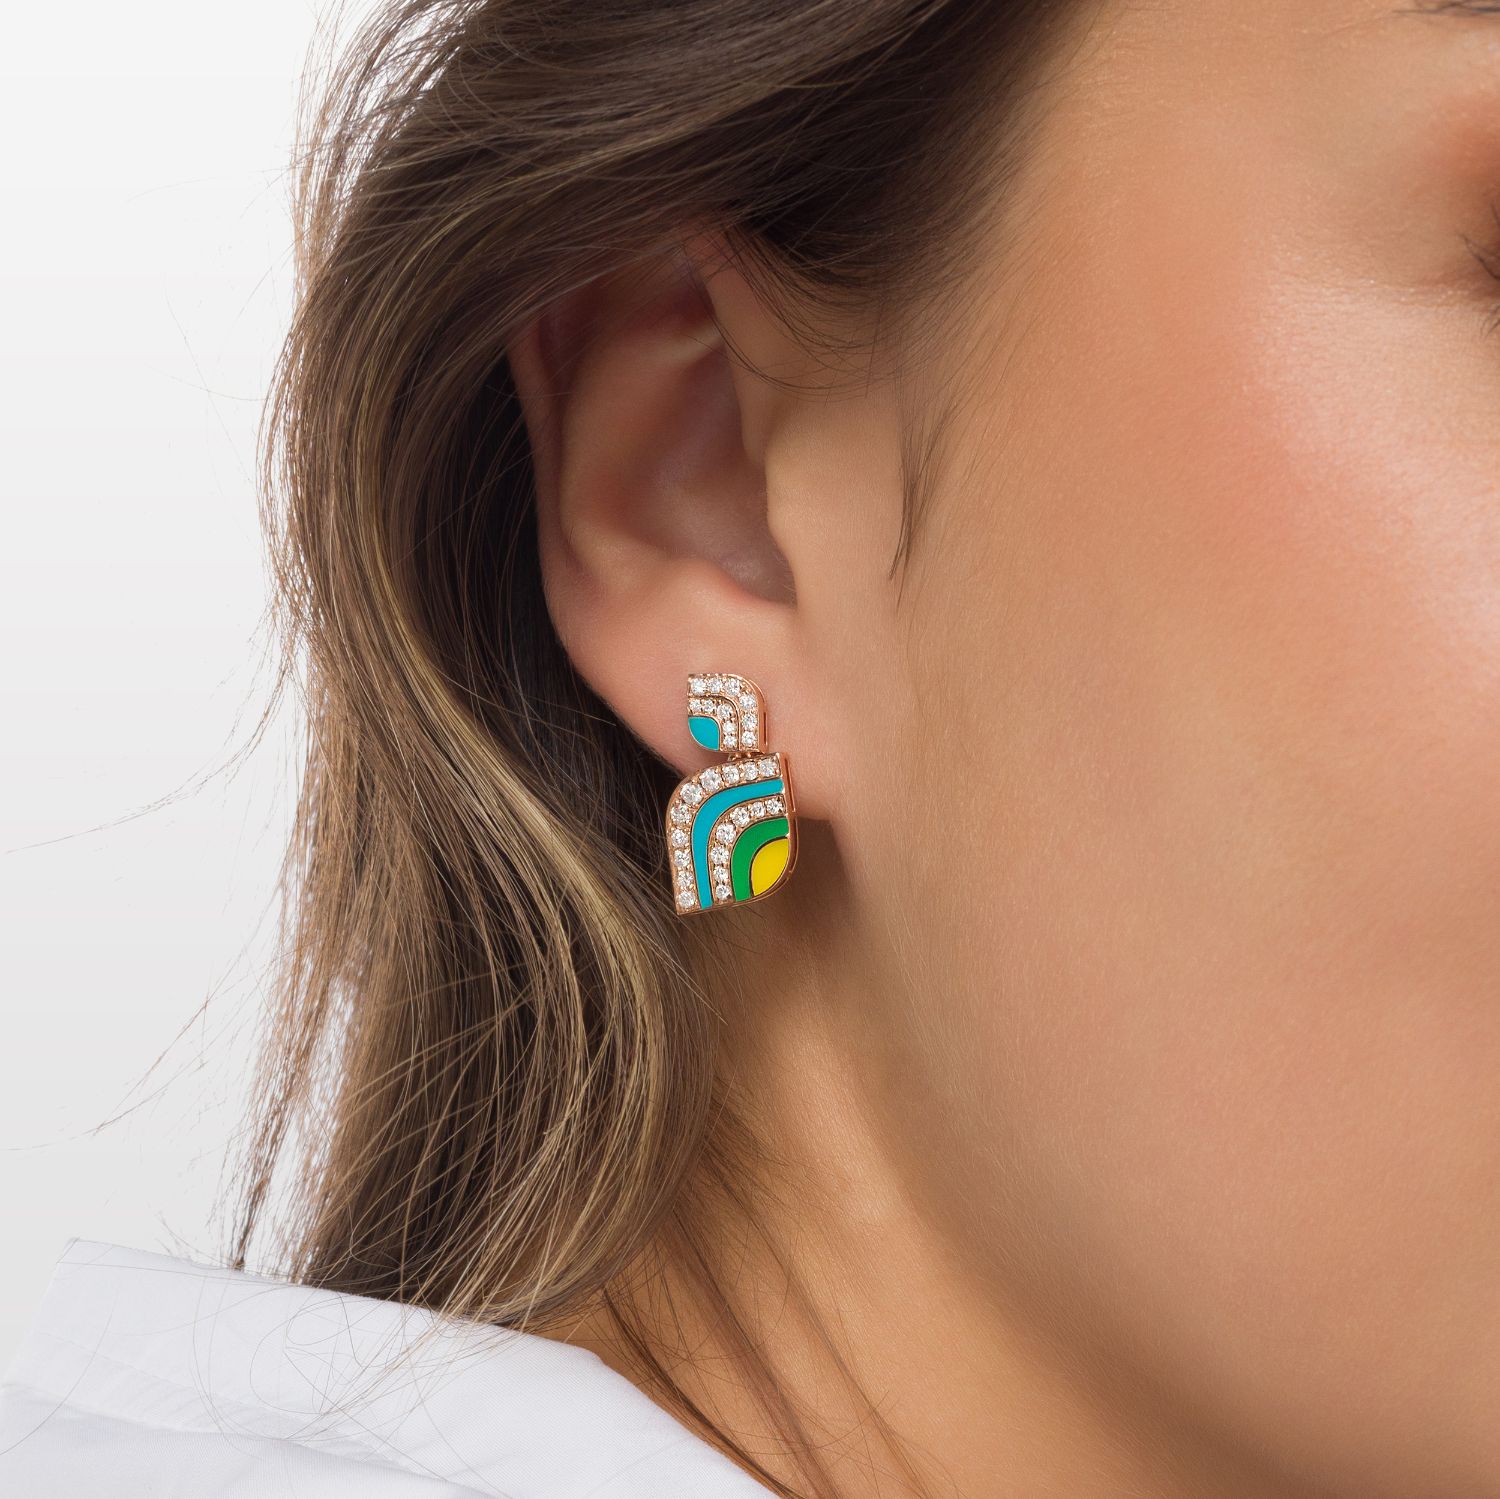 The Rainbow Connection Earrings